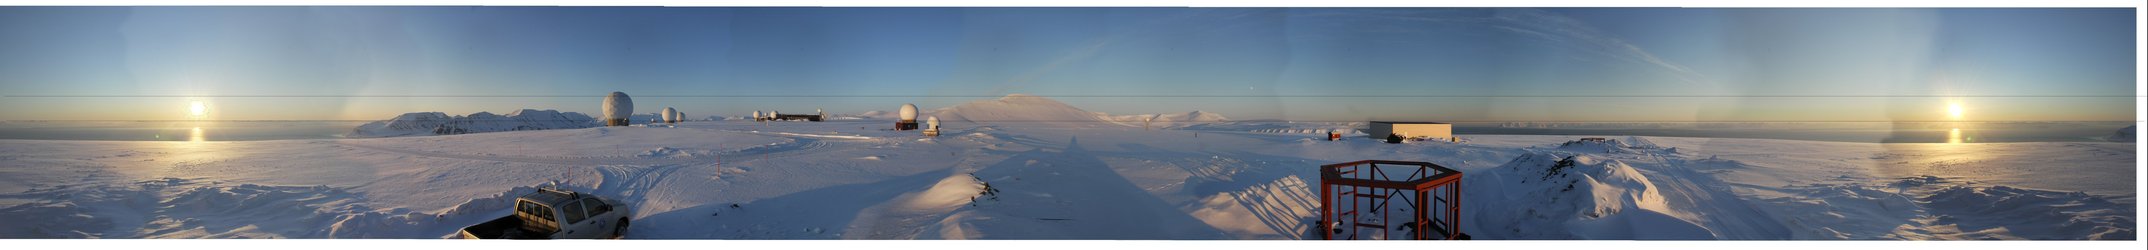 Galileo IOV ULS/GSS site at Svalbard, Norway